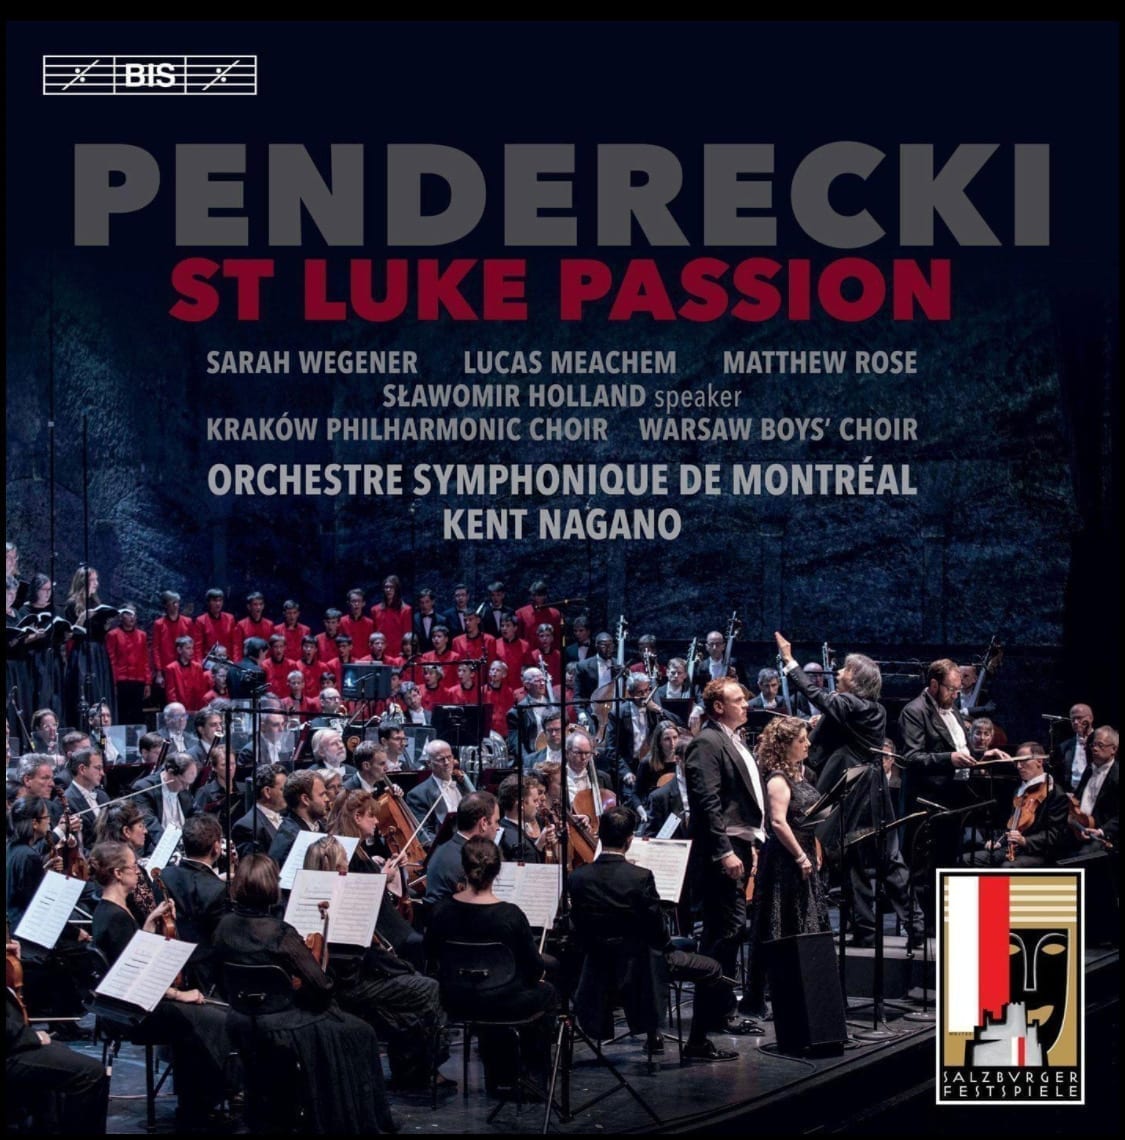 Penderecki's St Luke Passion, featuring Lucas Meachem, Baritone